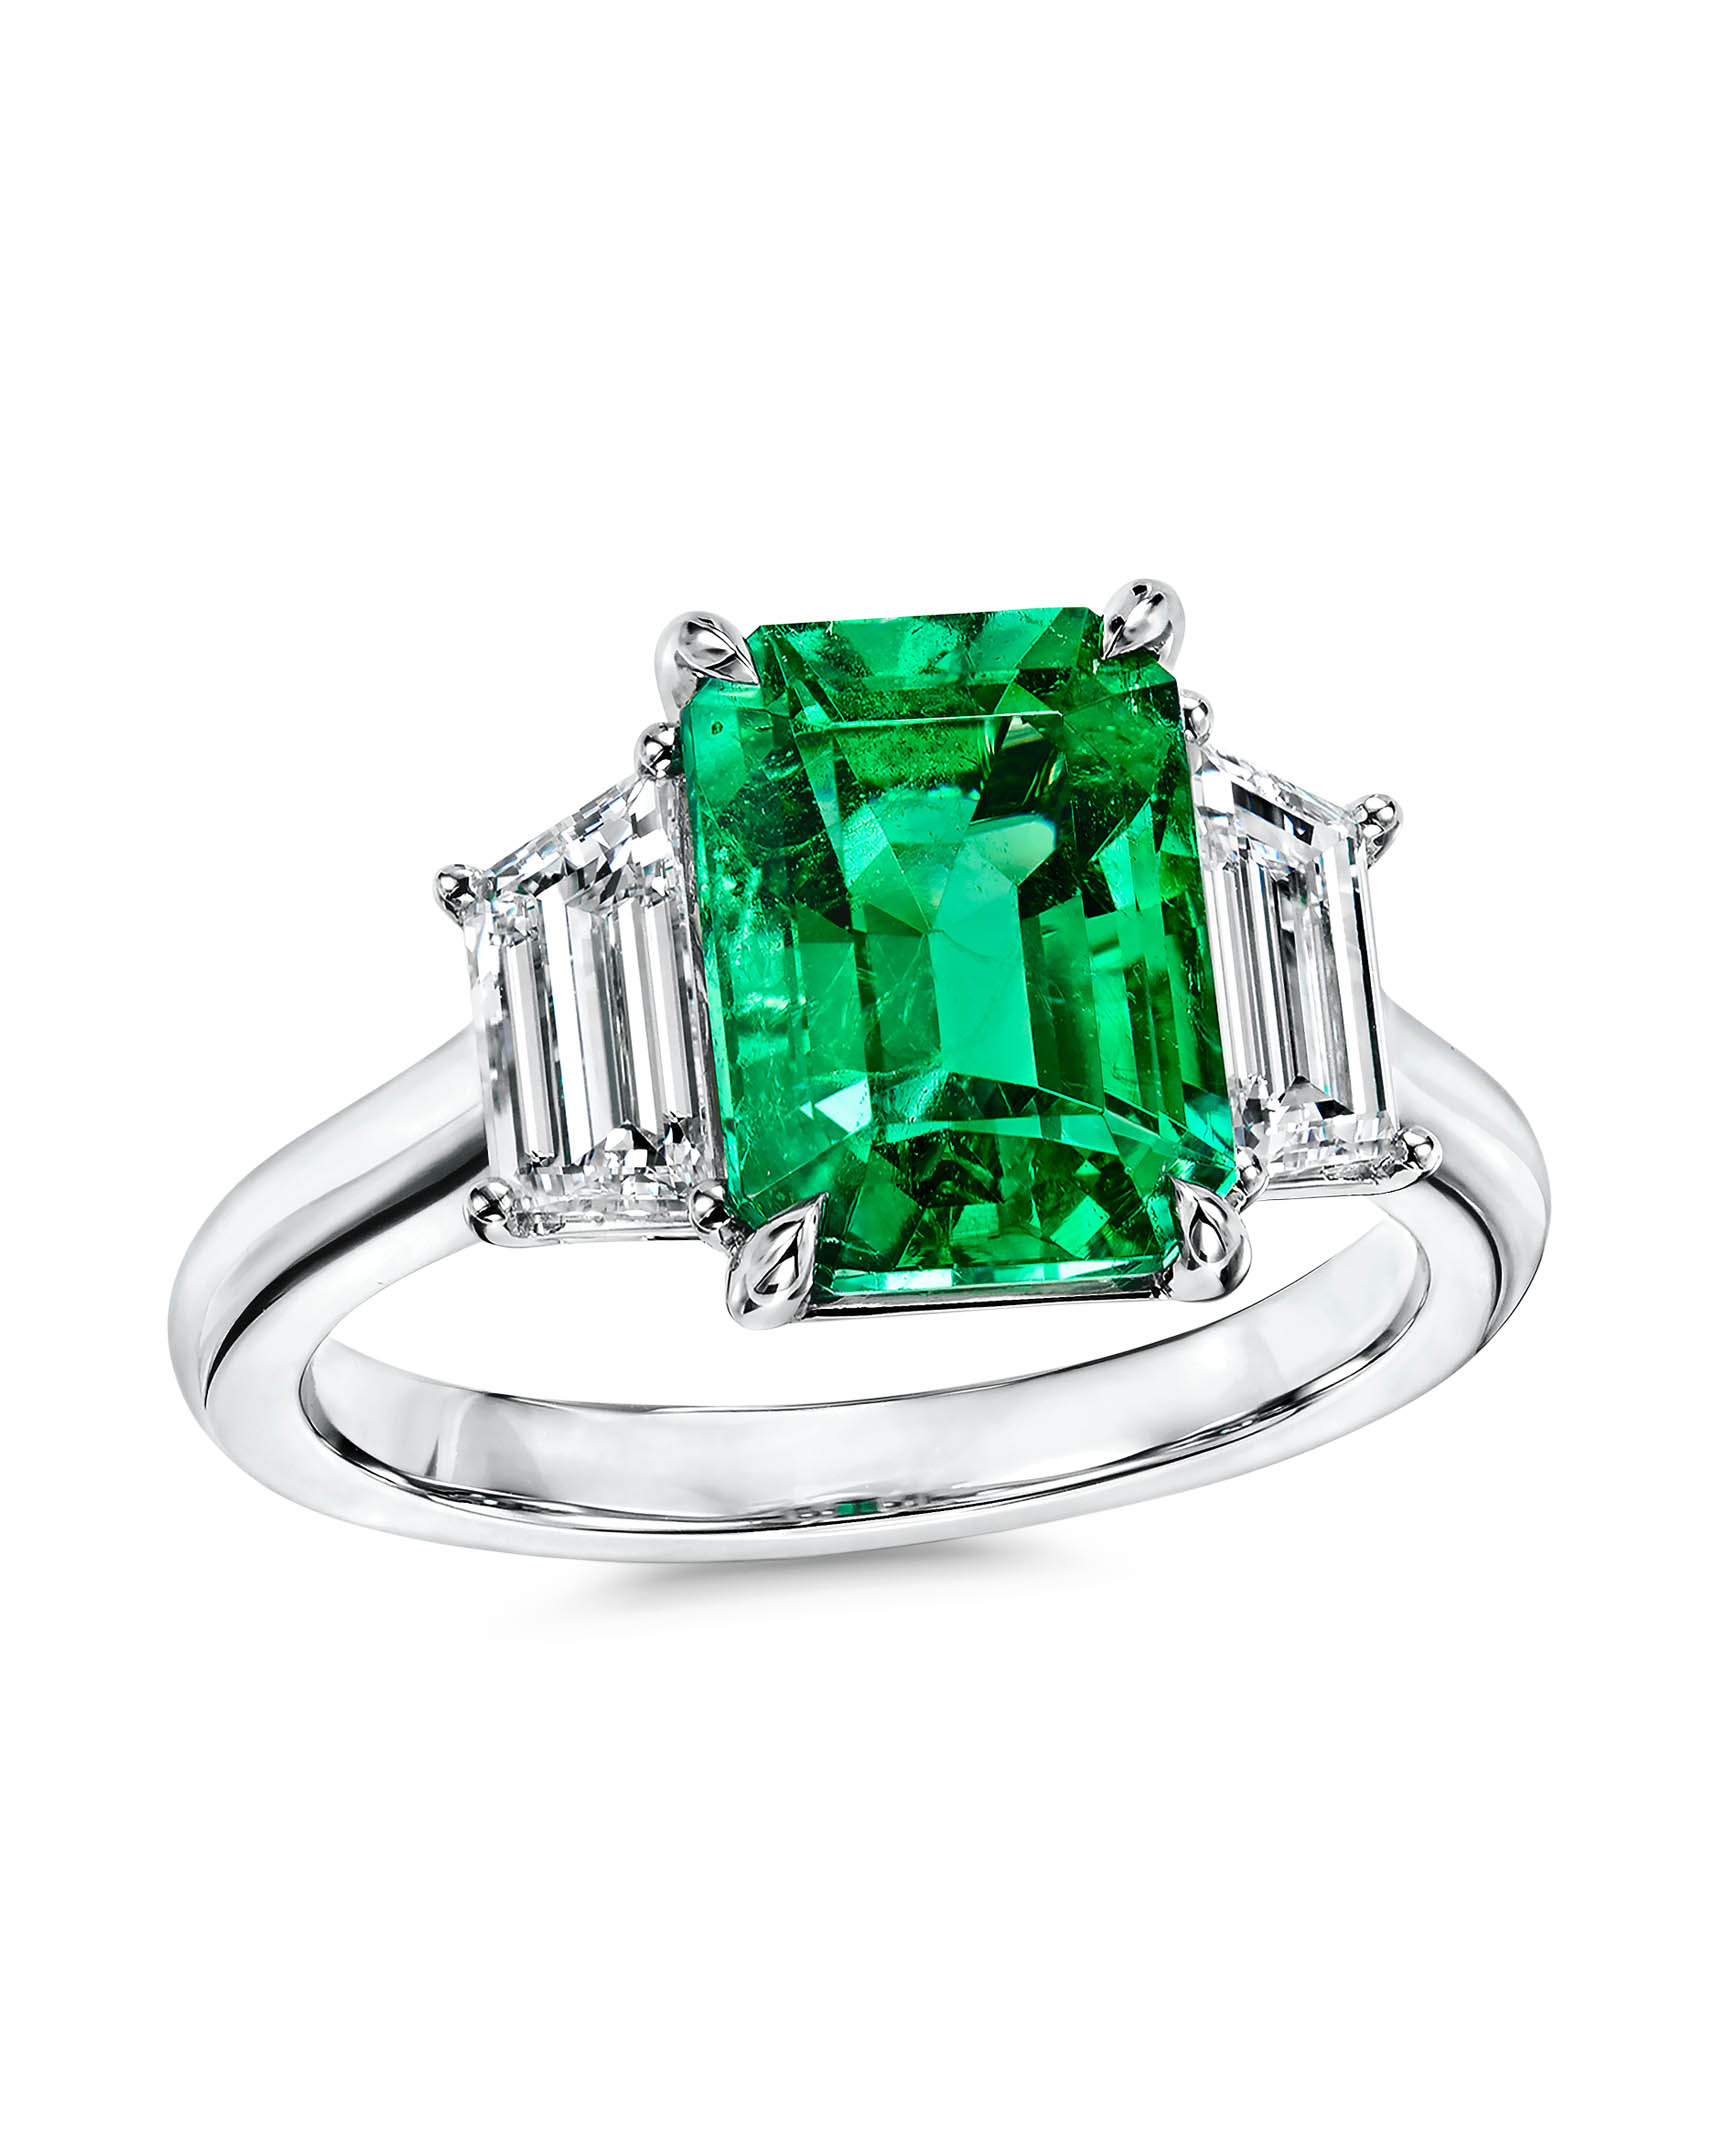 Emerald Cut Diamond 3-Stone Rings -Anthony's Jewelers- (800) 927-9030